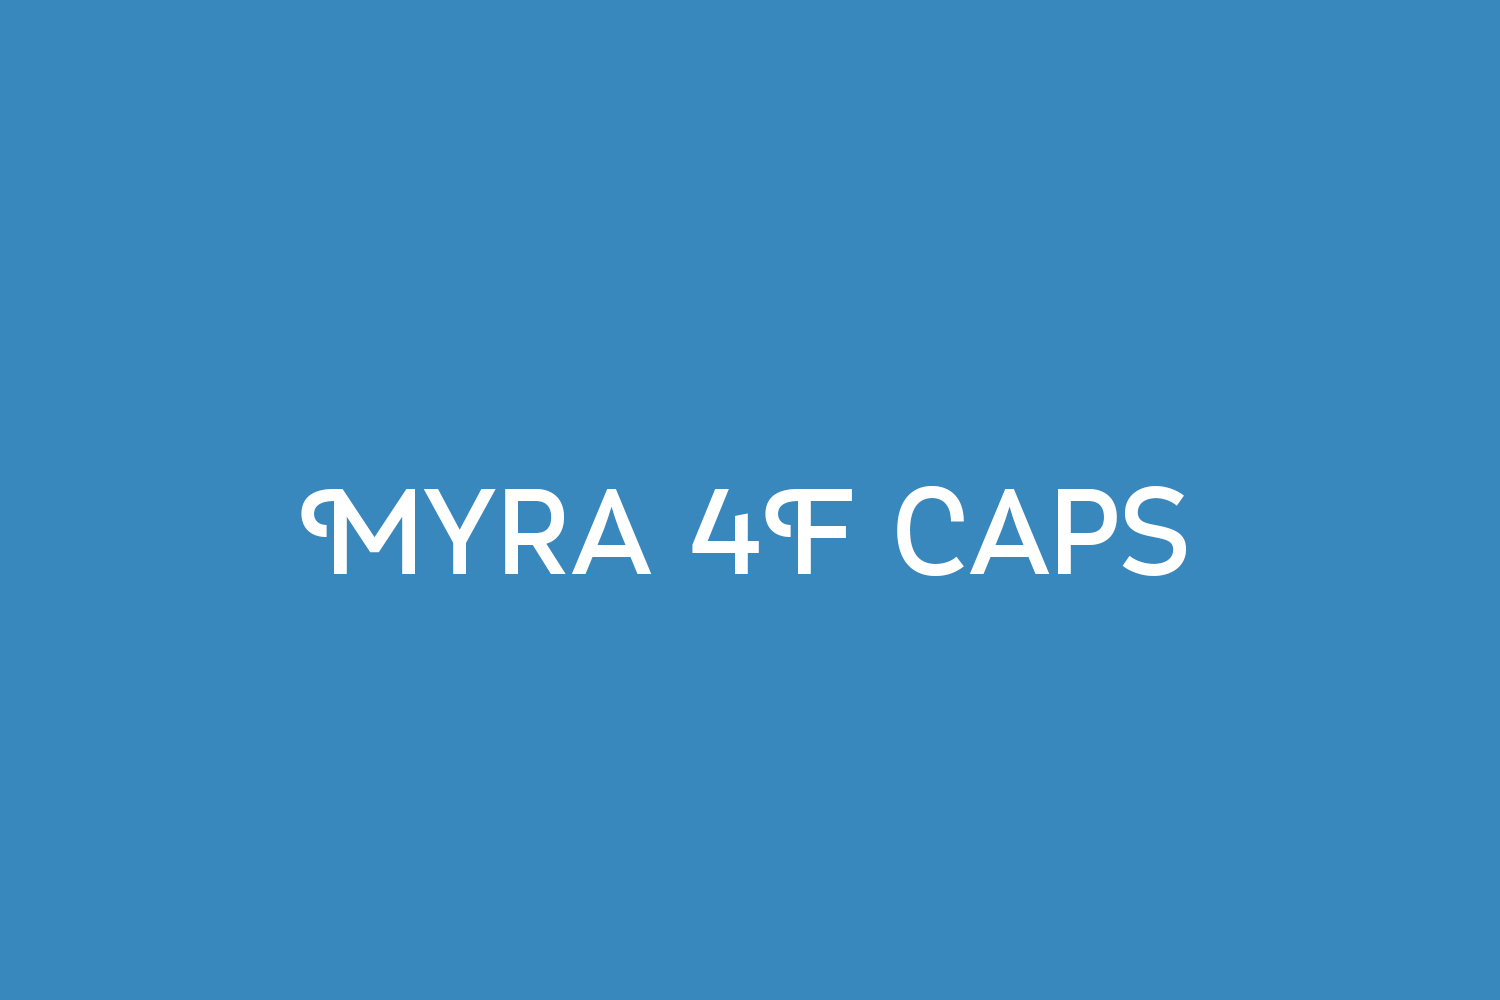 Myra 4F Caps